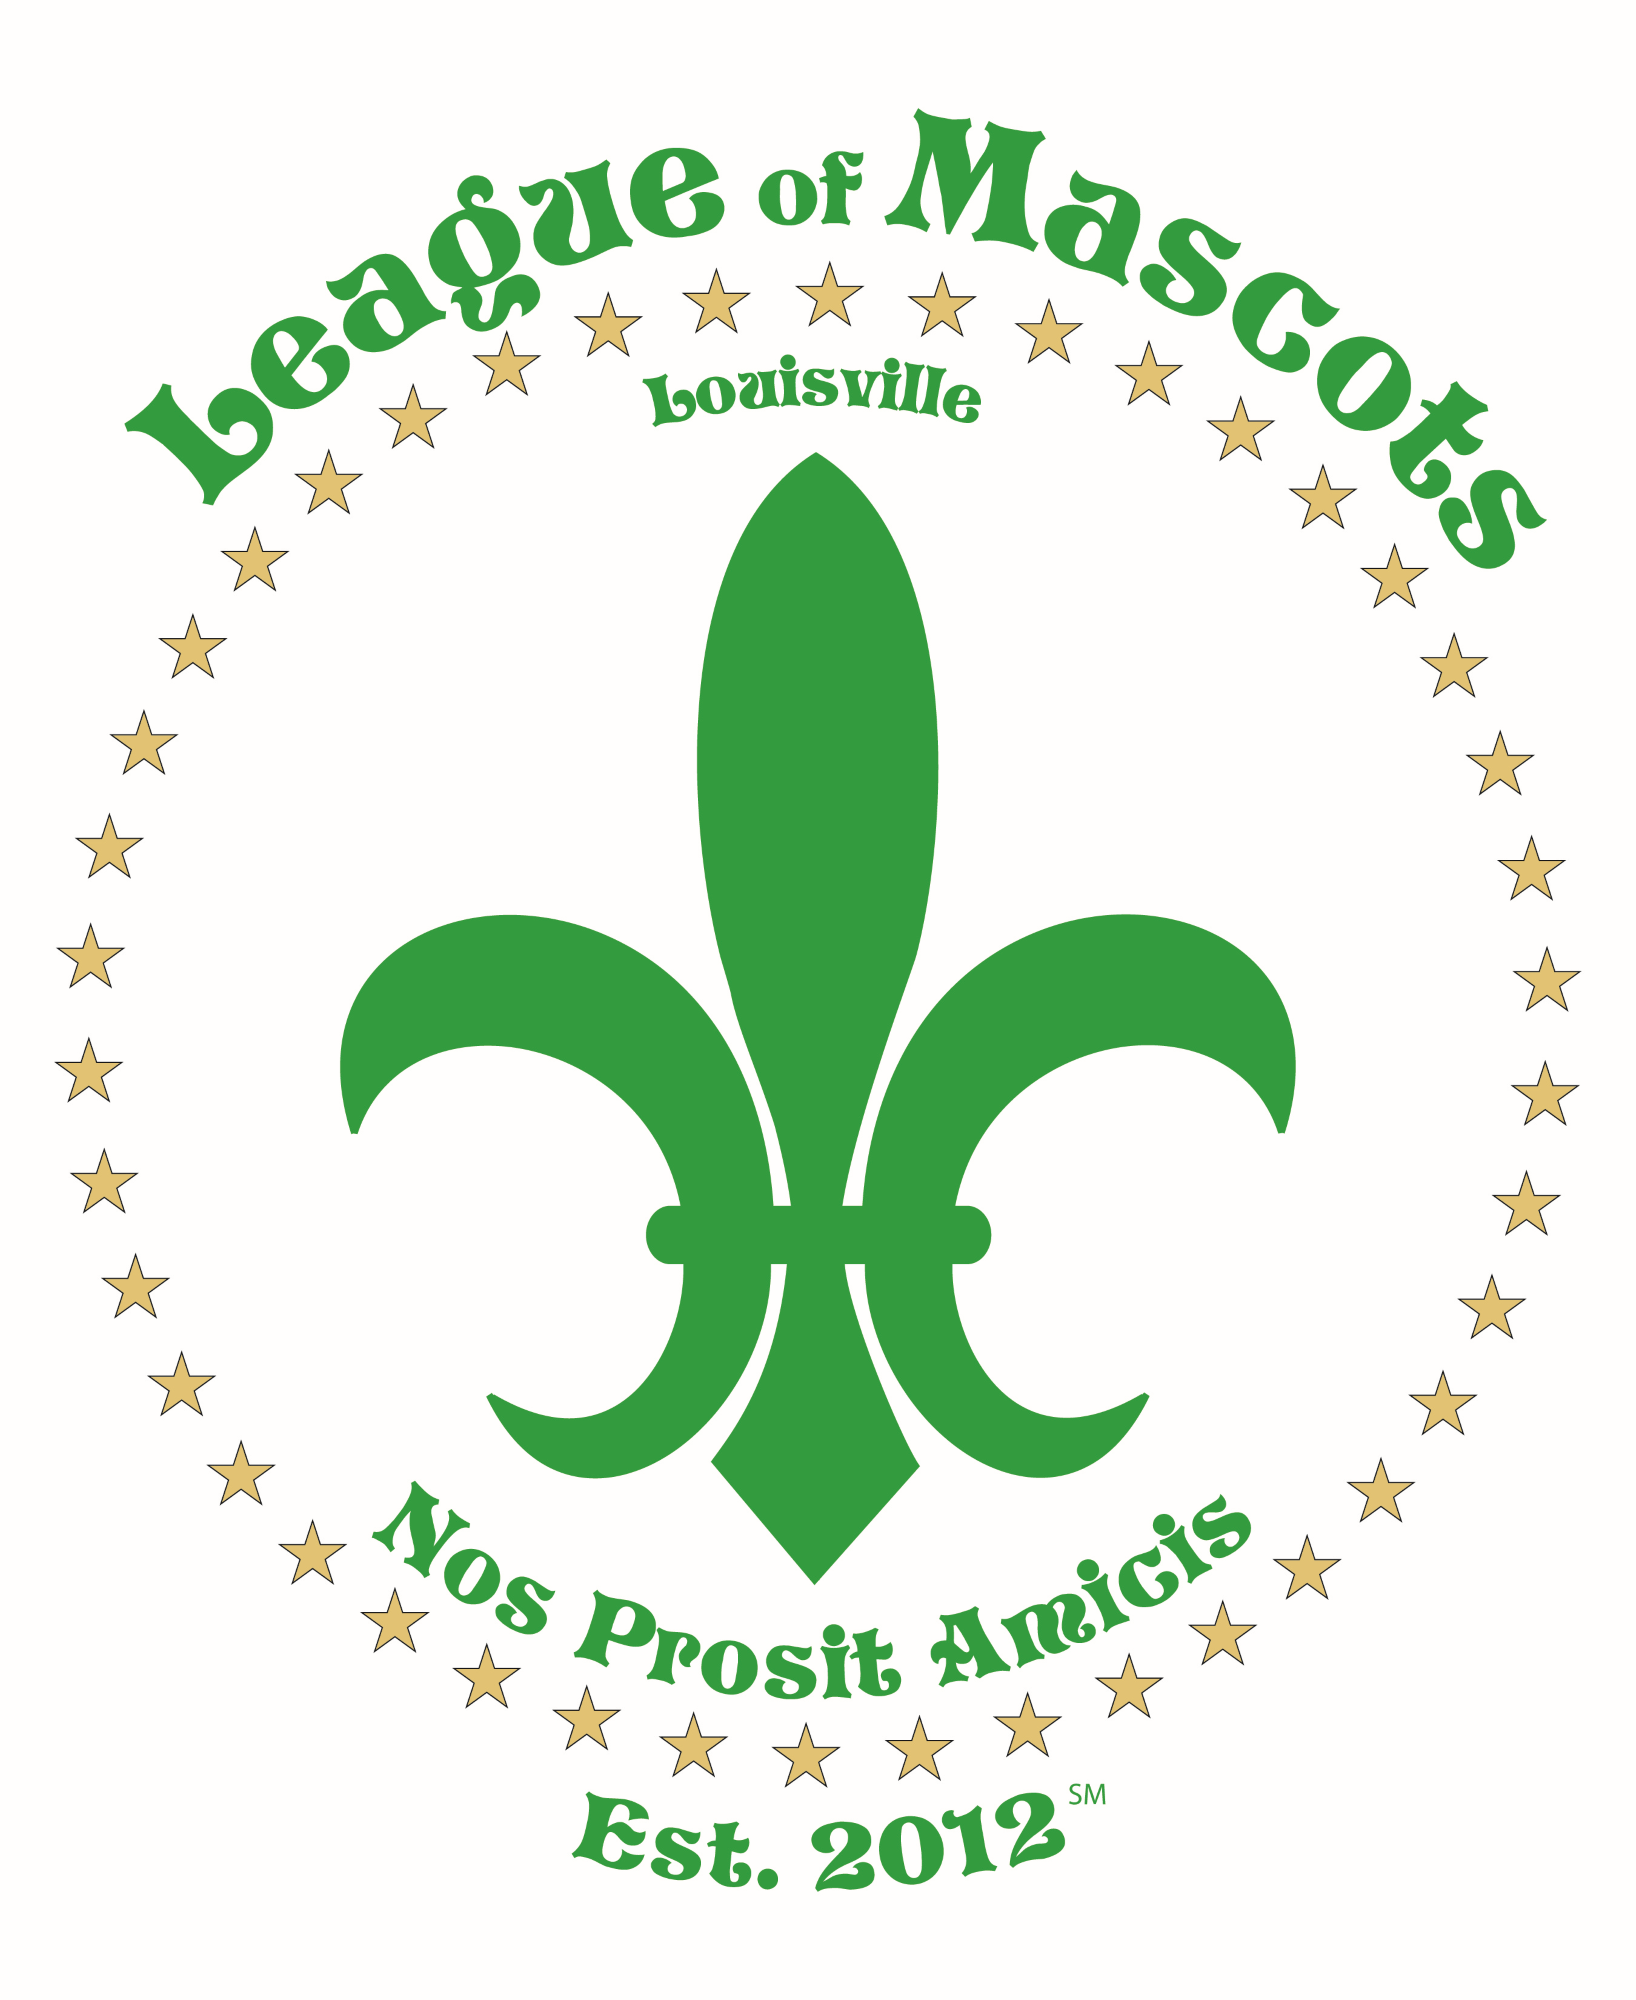 Louisville League of Mascots